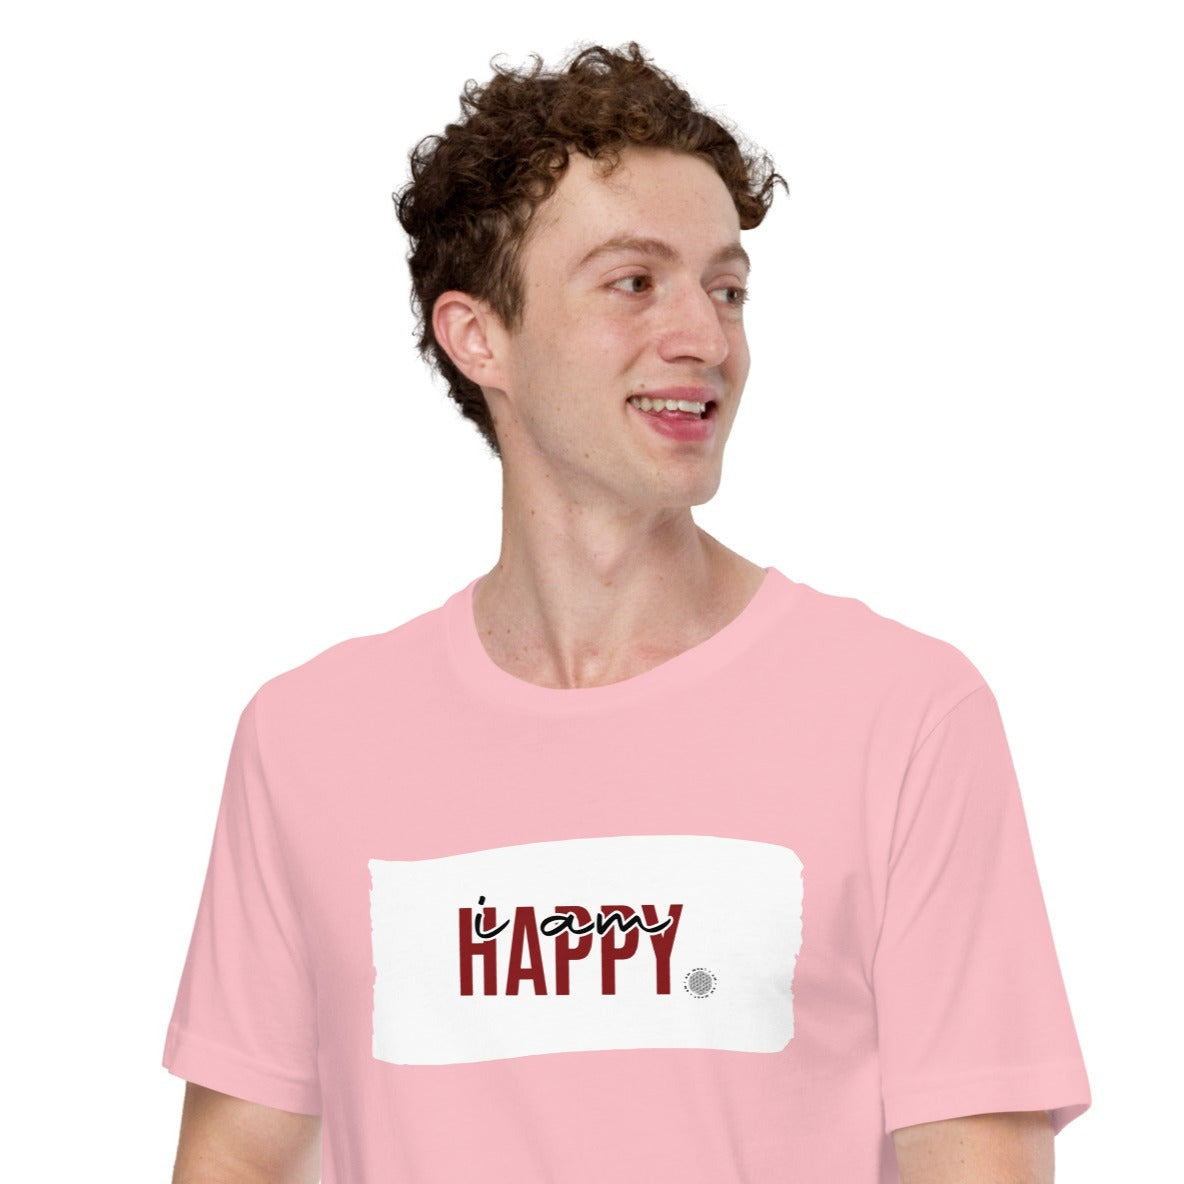 I Am Happy Adult Unisex T-Shirt pink